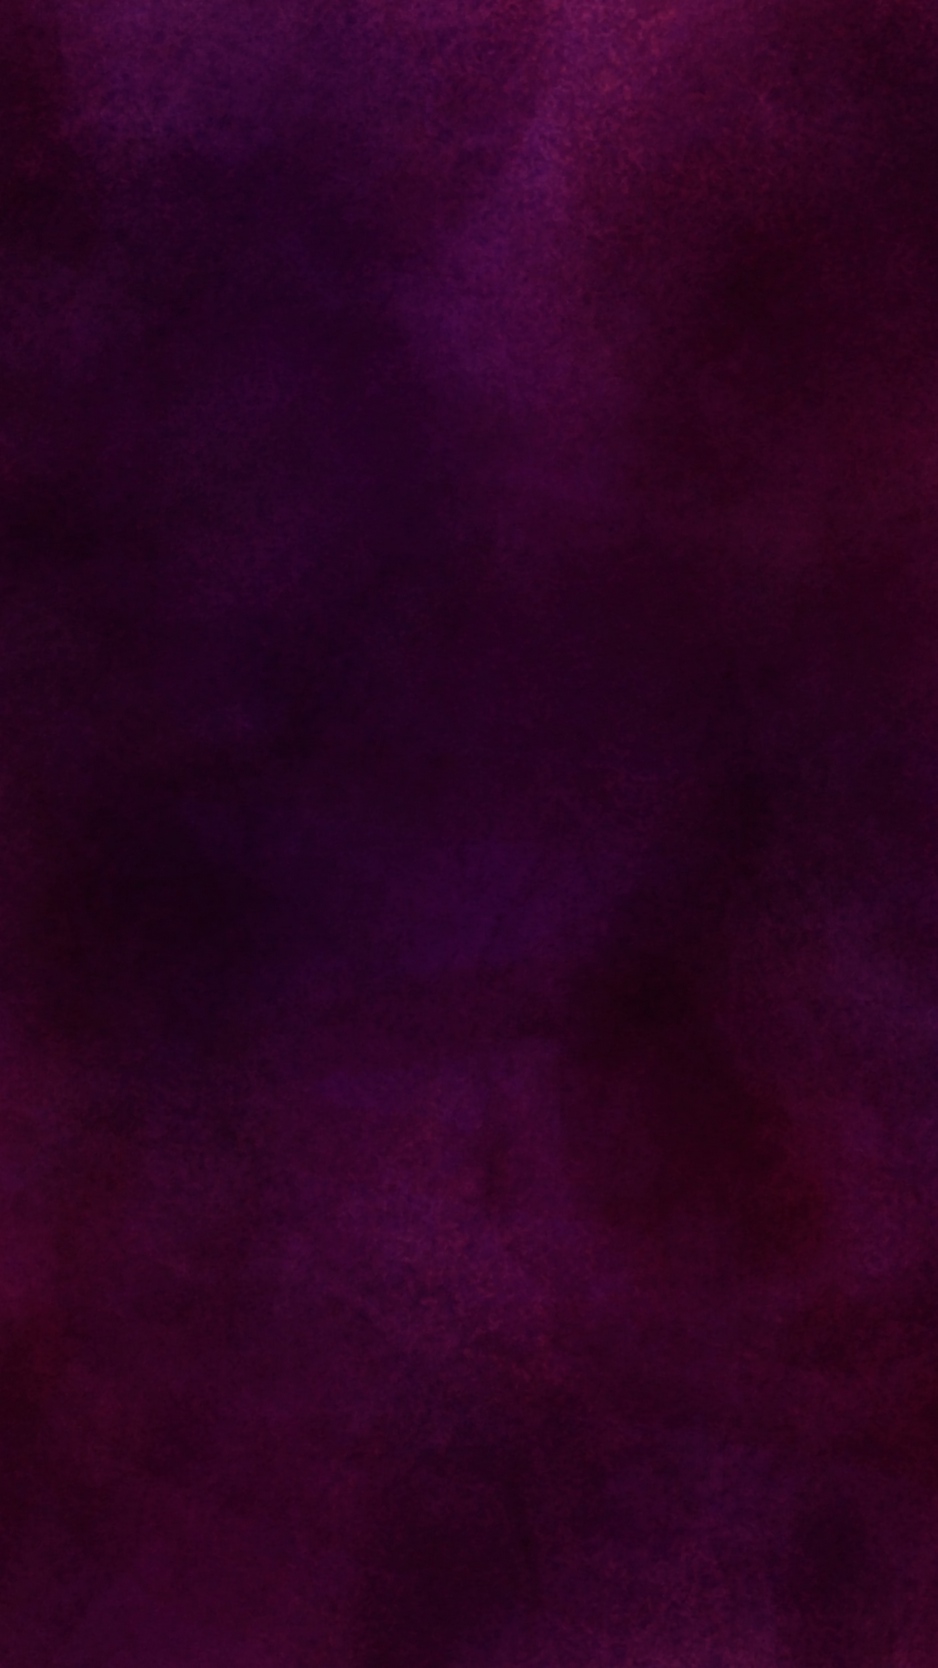 Wallpaper Texture, Spots, Purple, Dark - Dark Purple Iphone Background ...